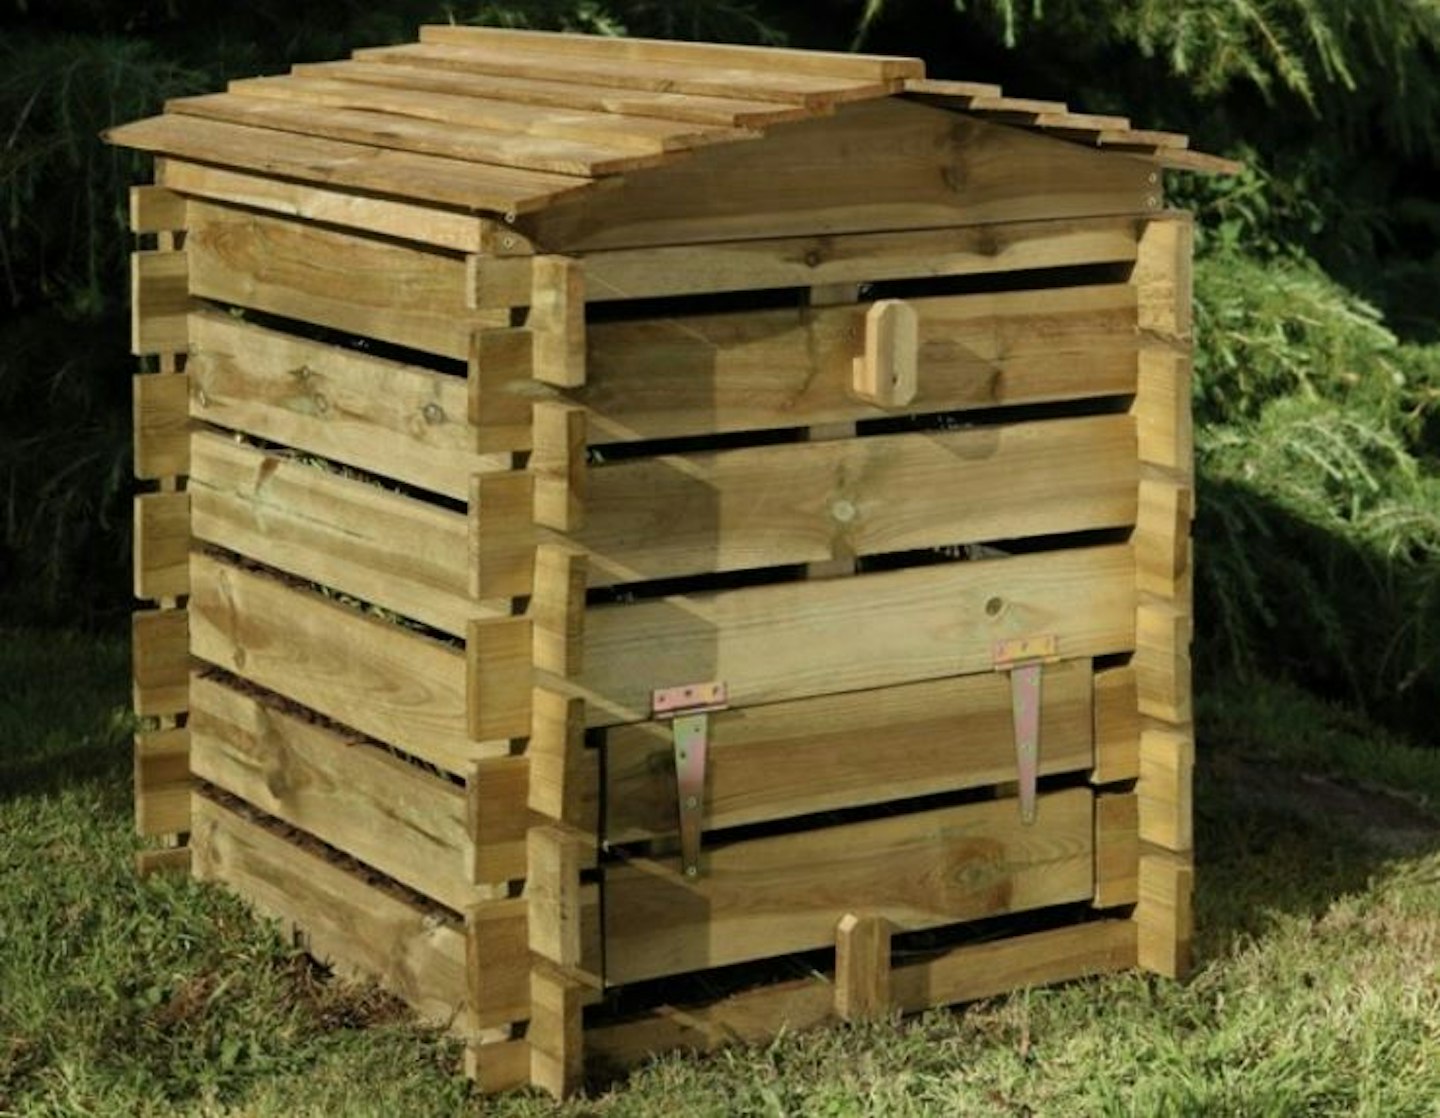 Beehive Compost Bin